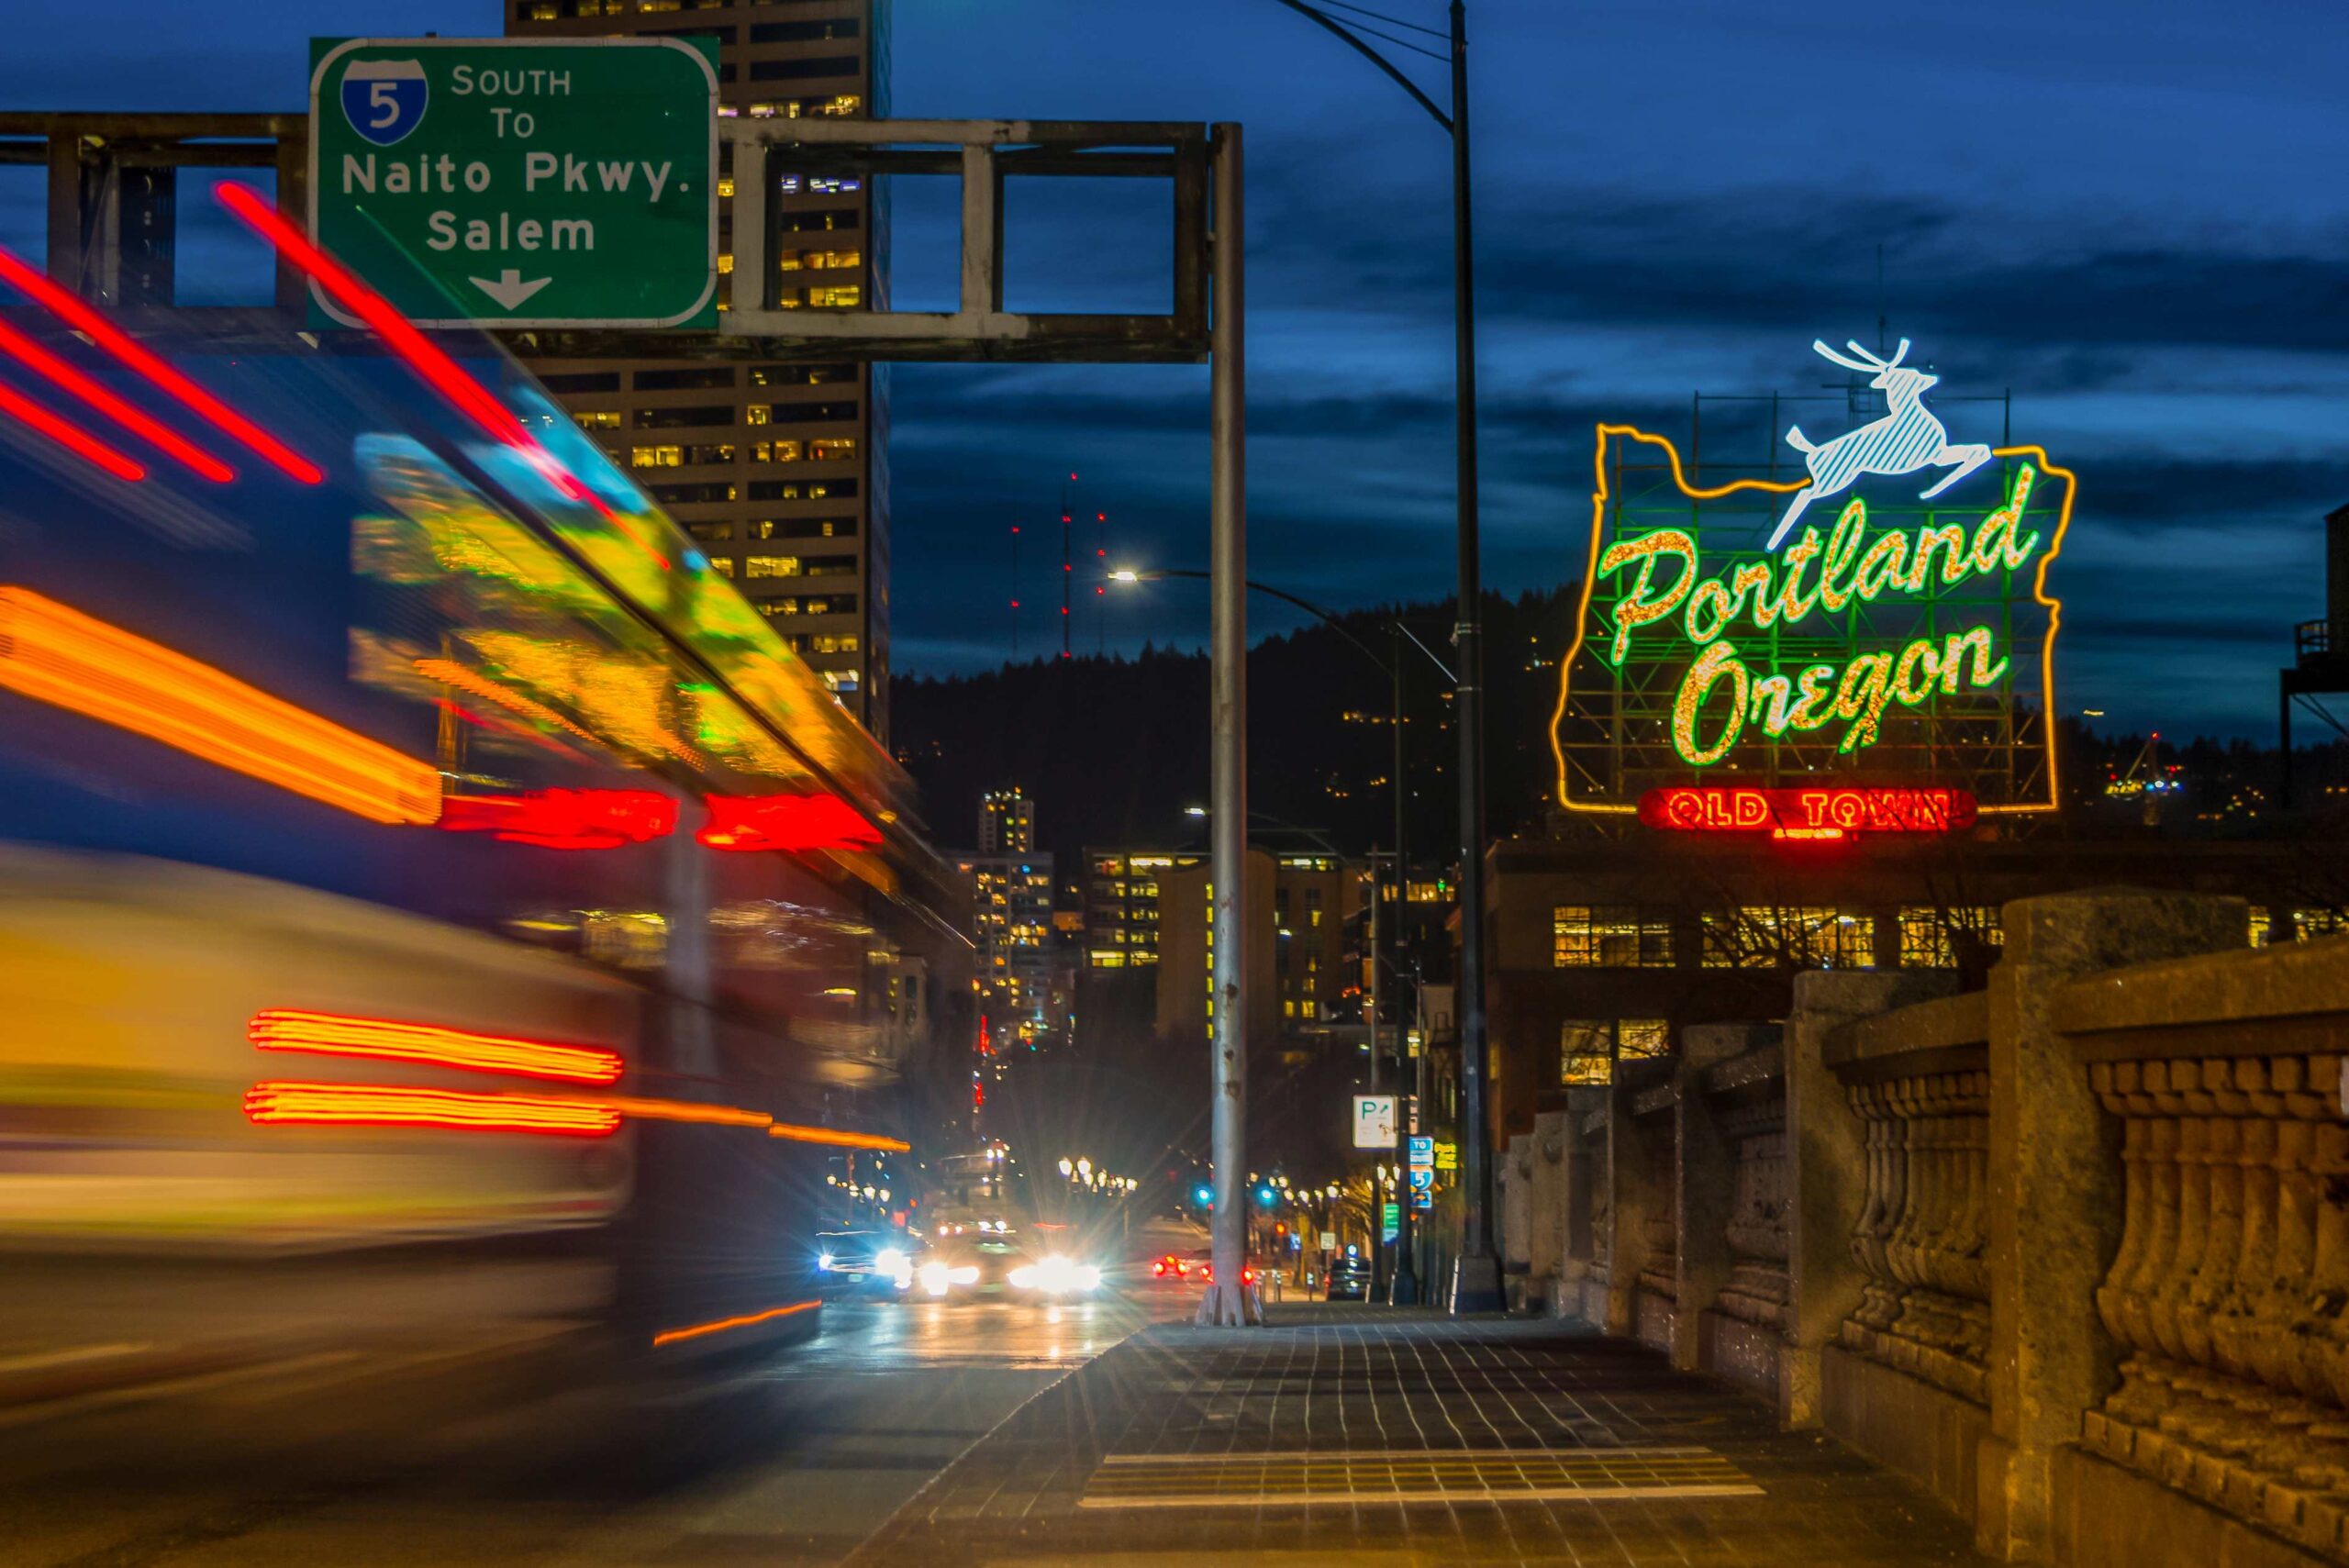 Portland, Oregon neon sign off of the freeway.